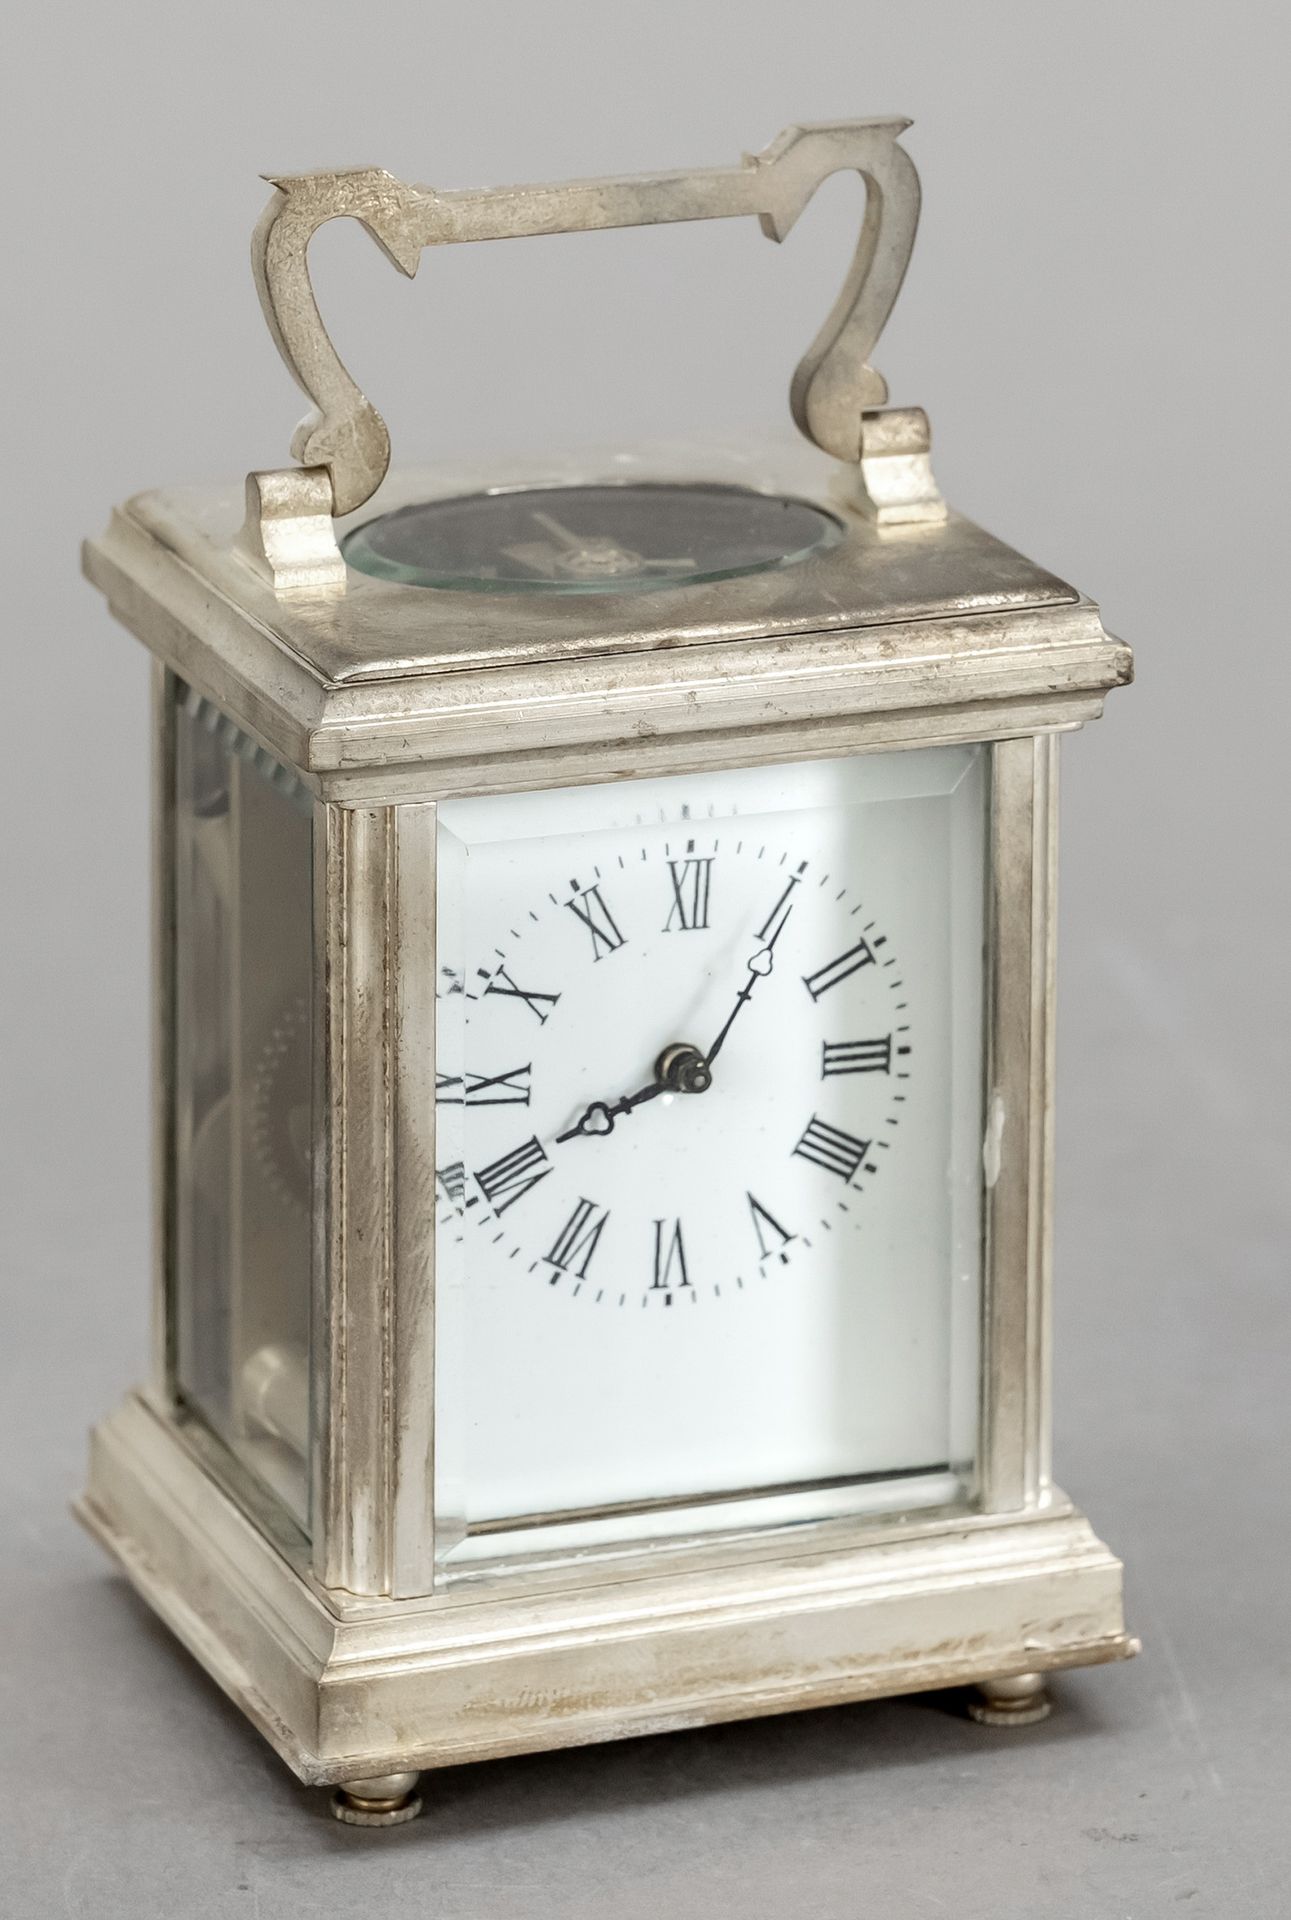 Null 旅行钟，20世纪下半叶，镀银，顶部把手，白色珐琅表盘上有罗马数字，黑色指针，四面有刻面玻璃，机芯有托盘式擒纵机构，钟表运行，高11厘米，宽6厘米，长5&hellip;